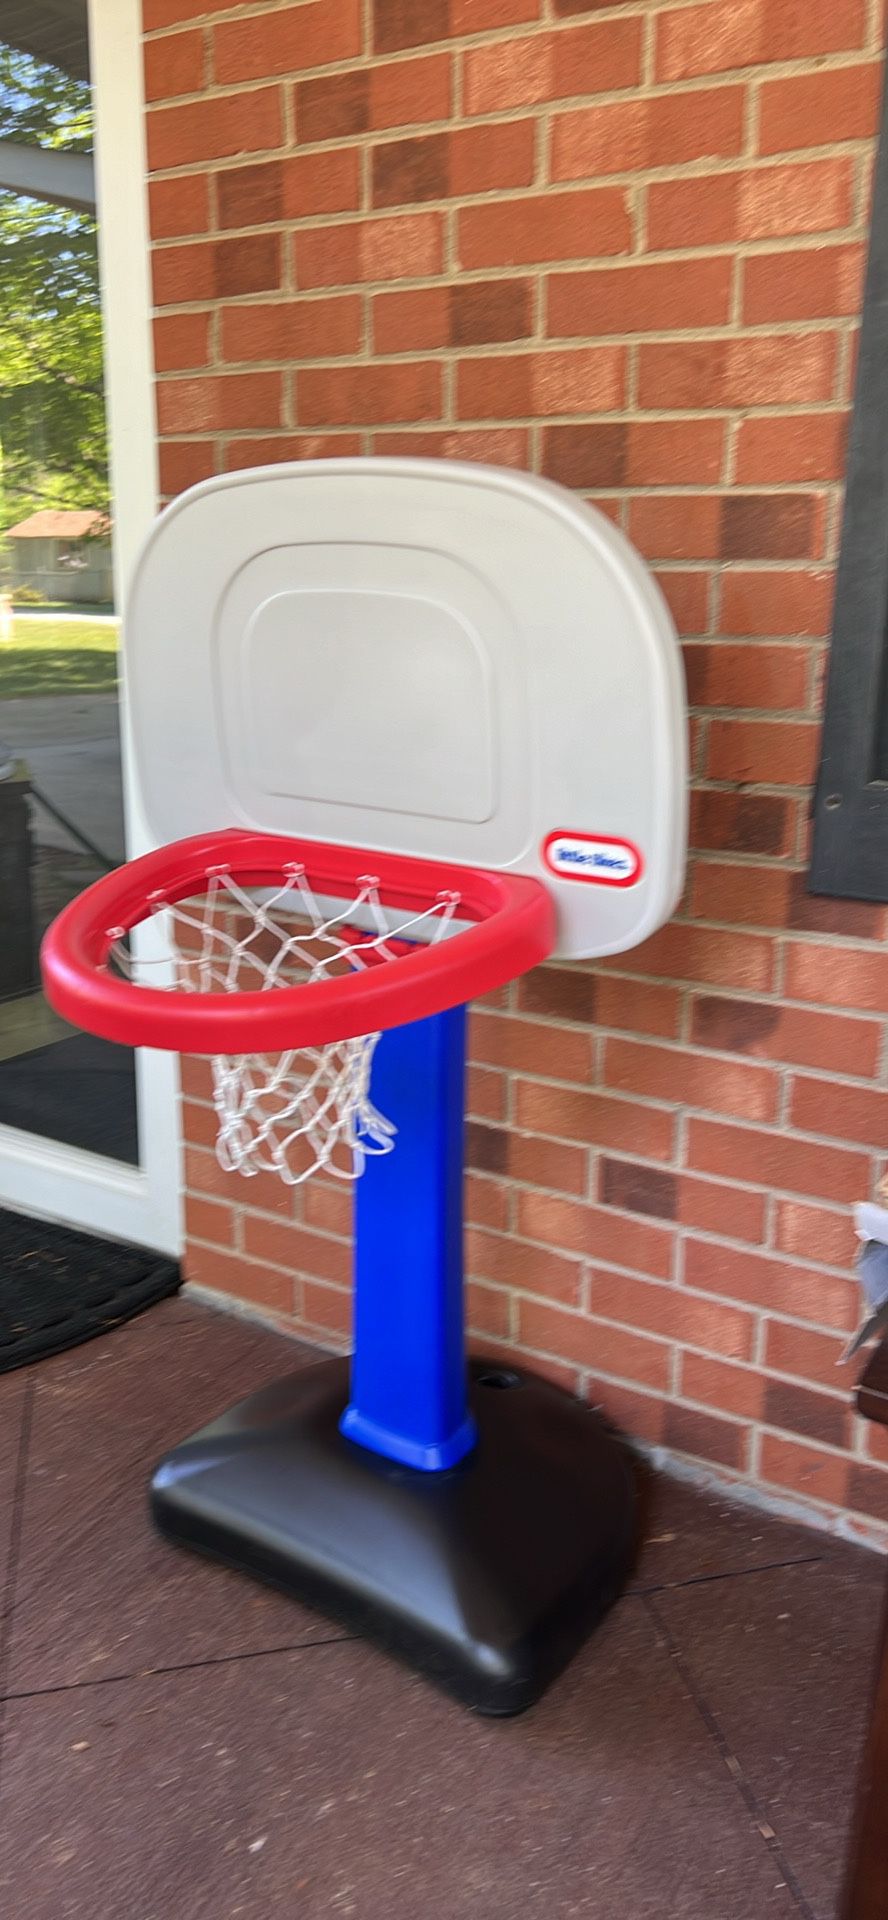 Little Tikes Adjustable Basketball Hoop Model 4612–99